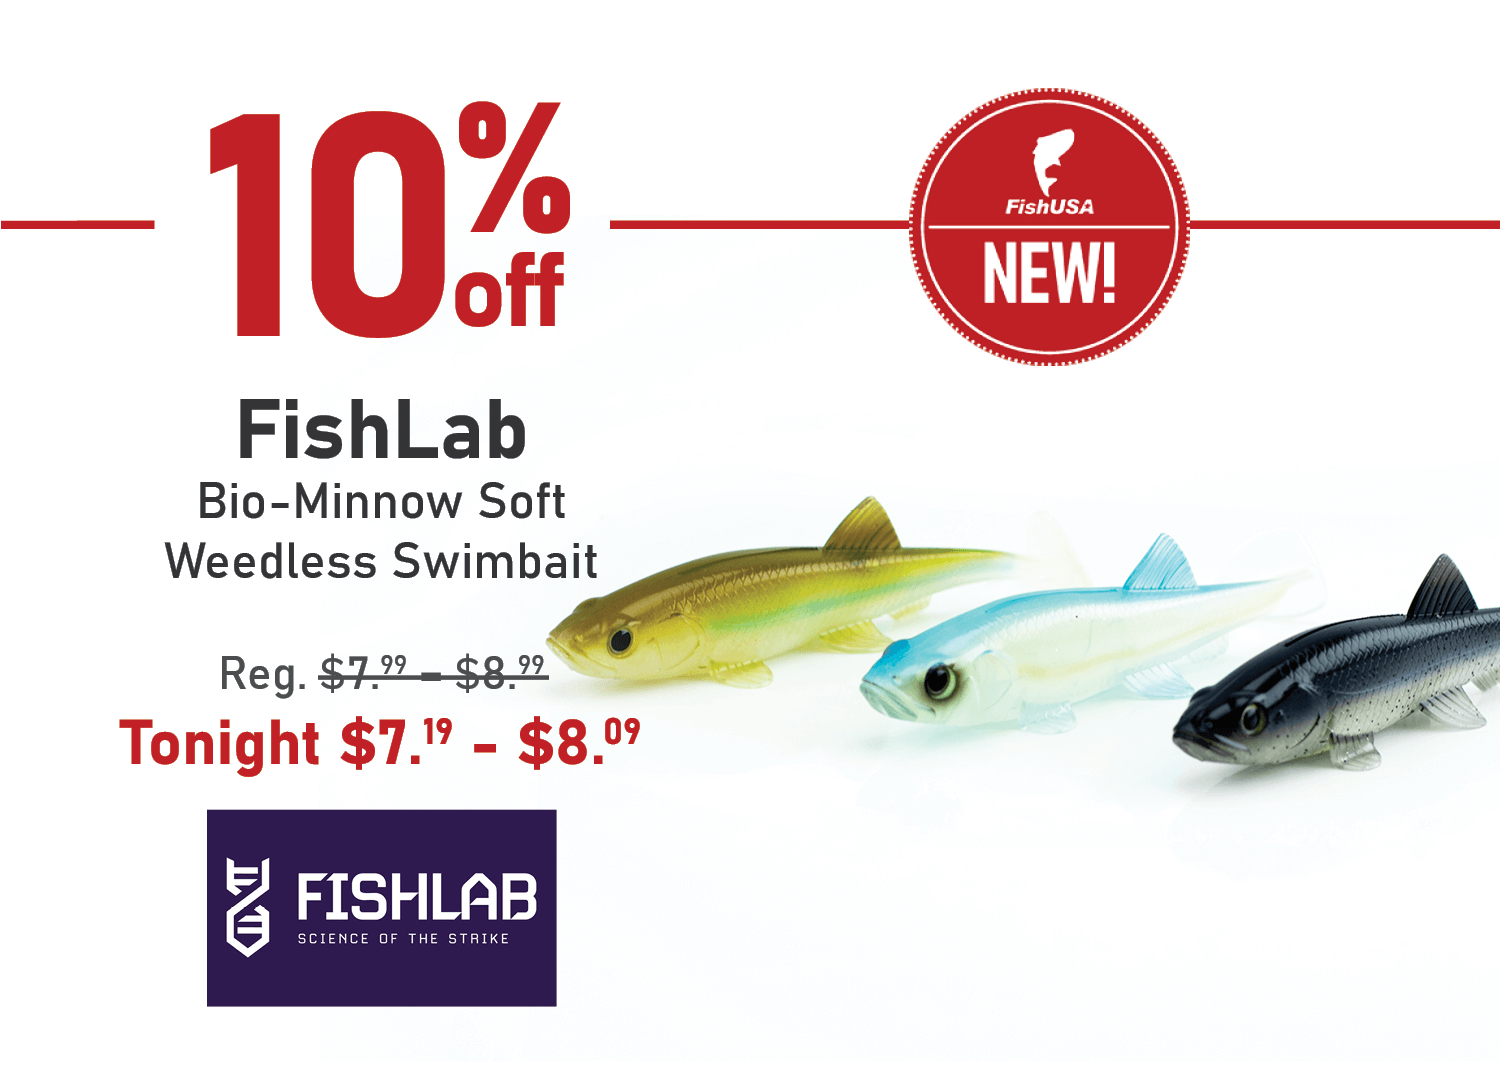 Save 10% on the FishLab Bio-Minnow Soft Weedless Swimbait